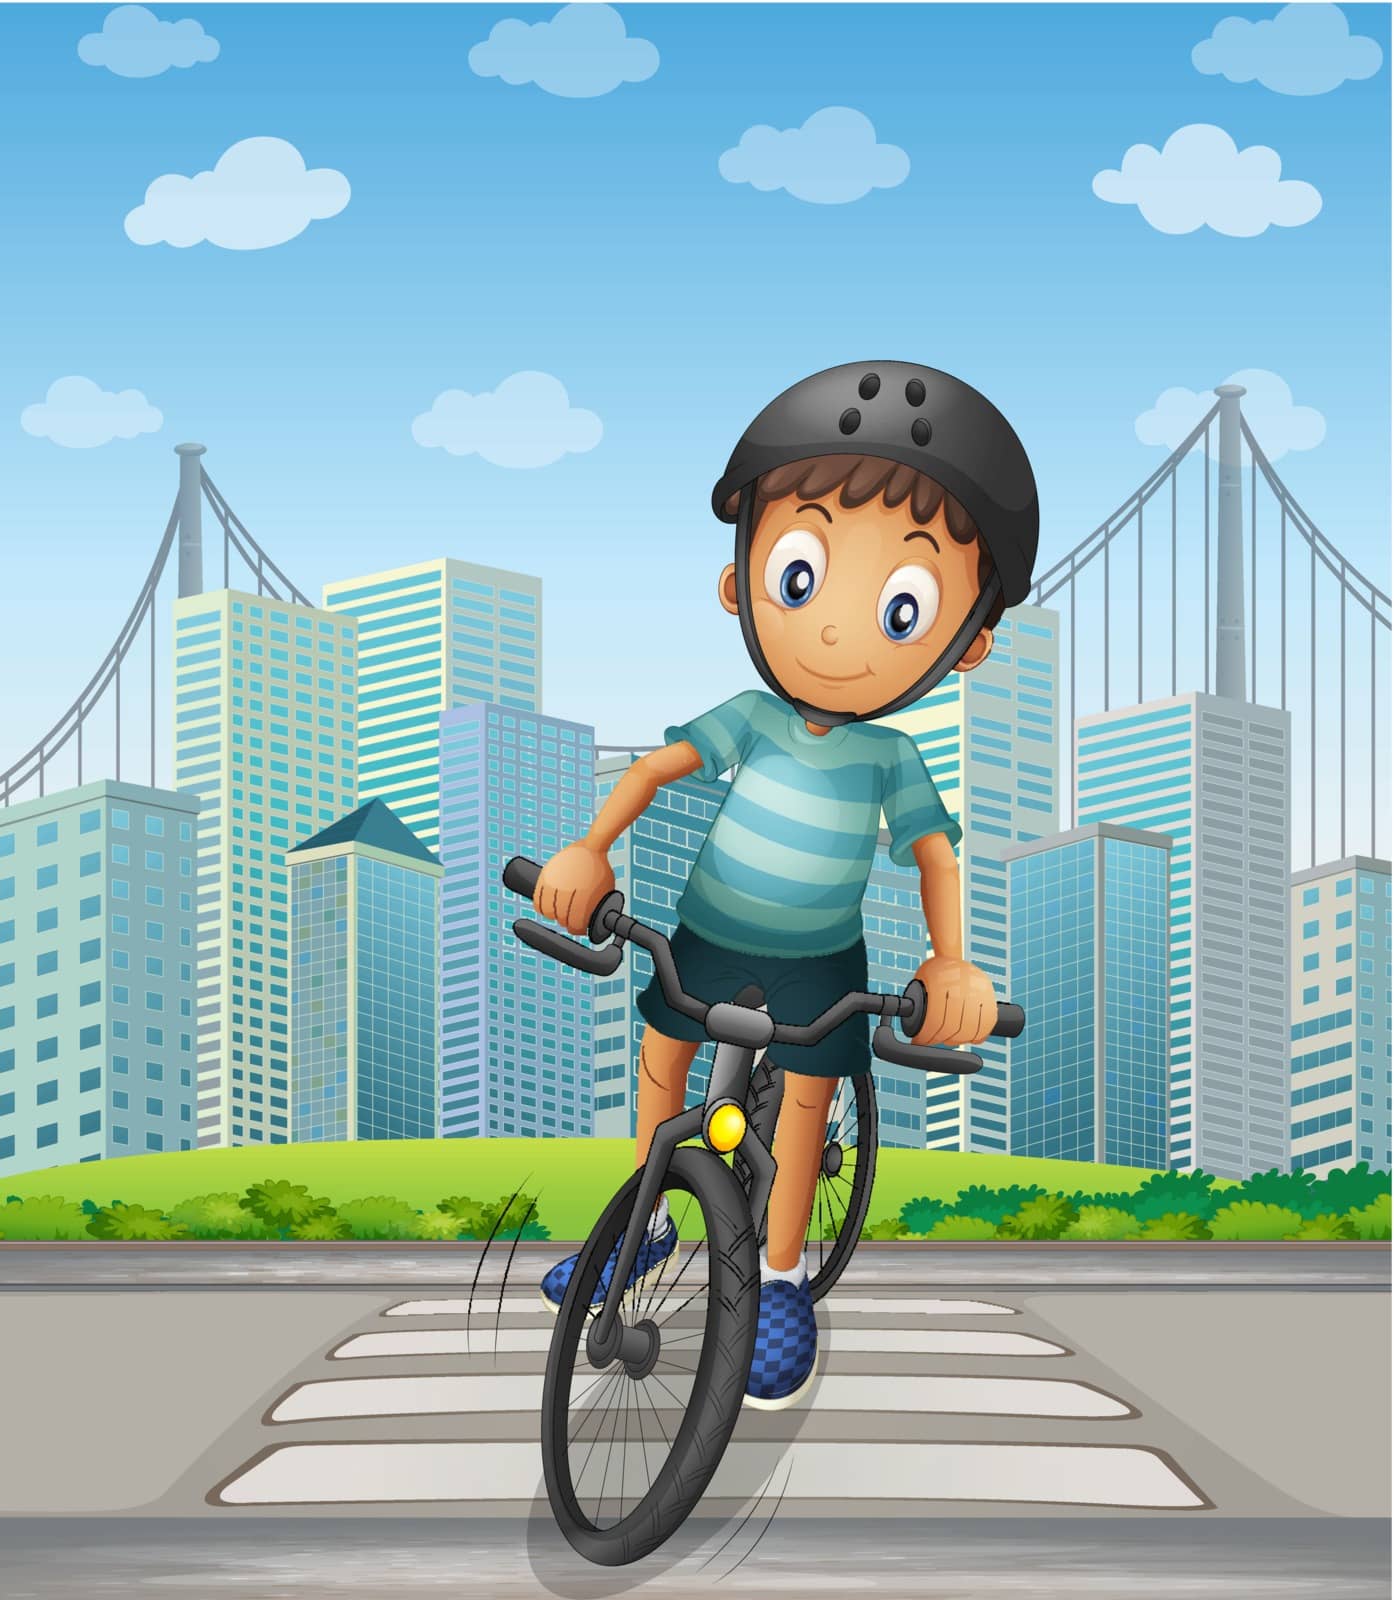 Illustration of a boy biking in the city